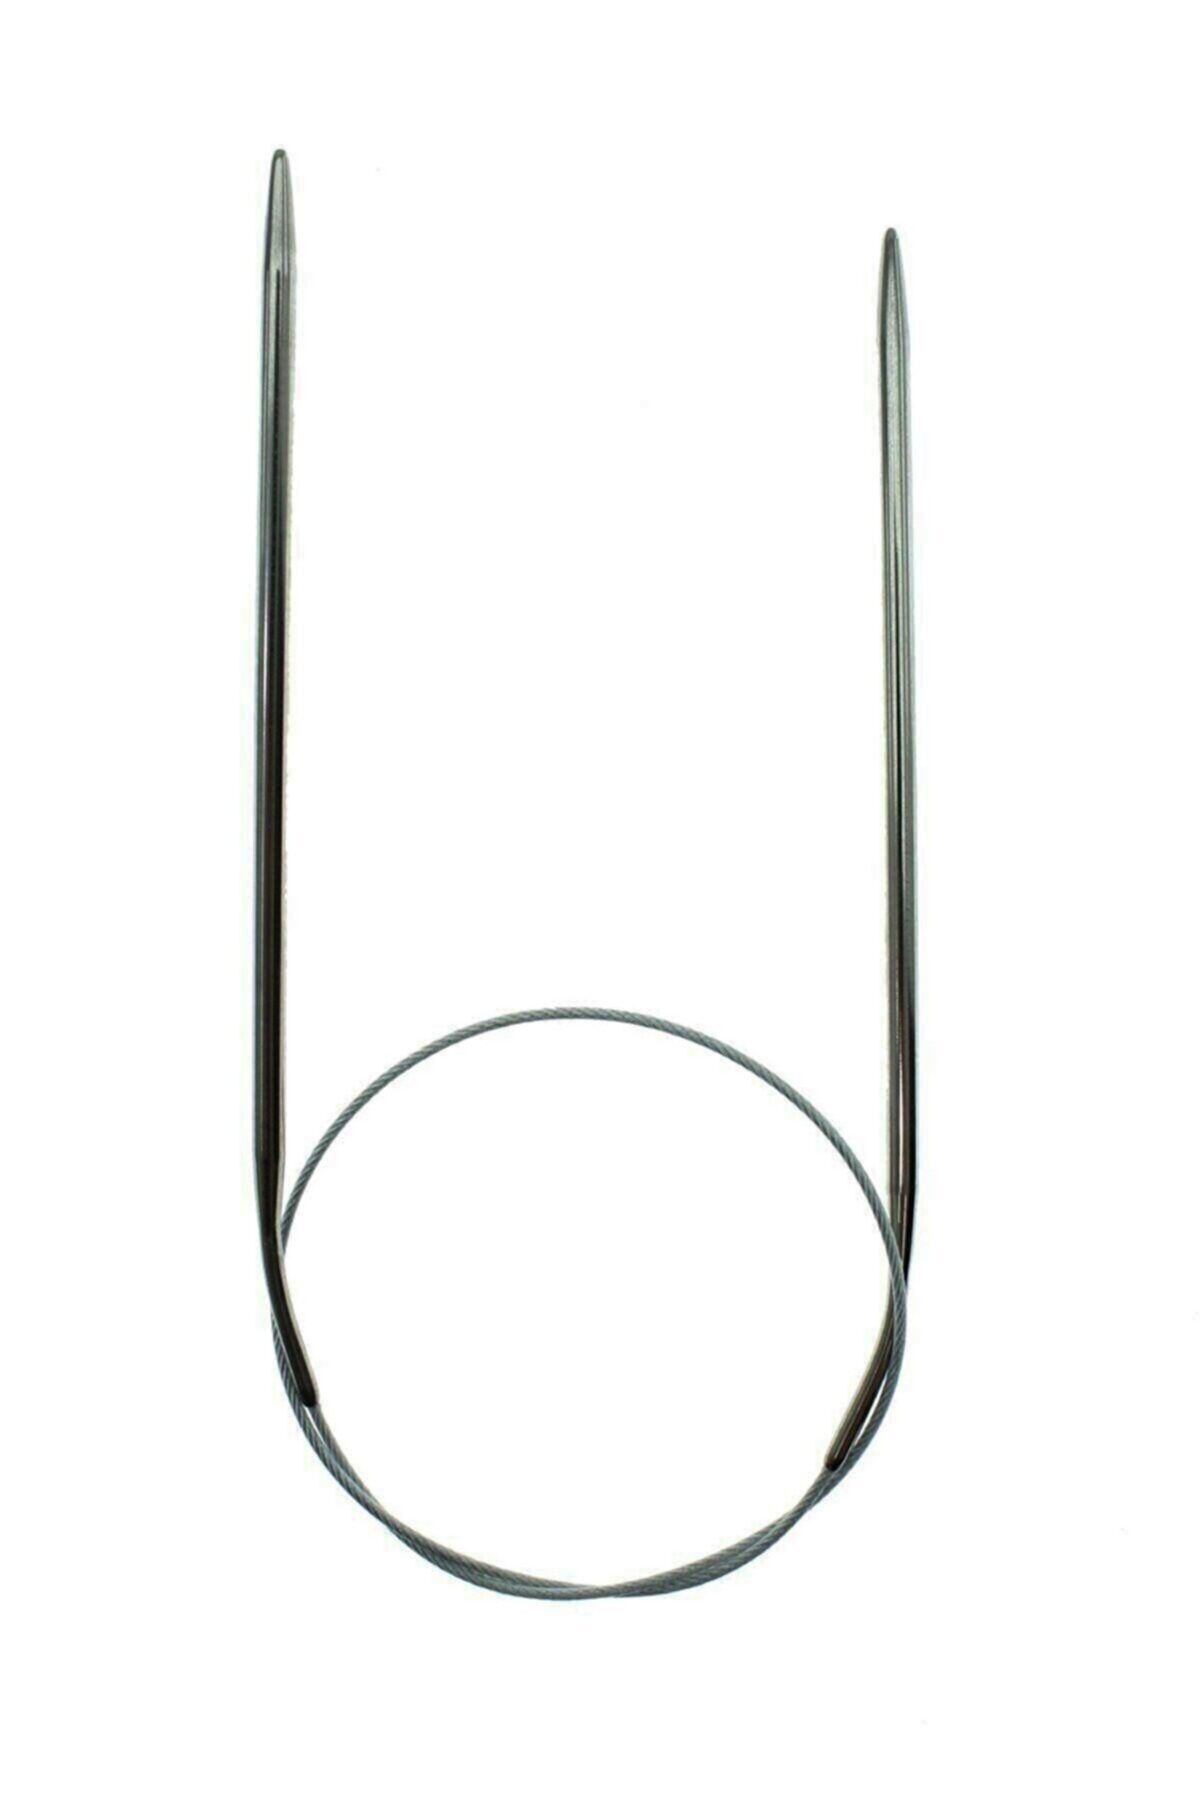 OPAL Metal Misinalı Örgü Şişi 100 cm No 4,5